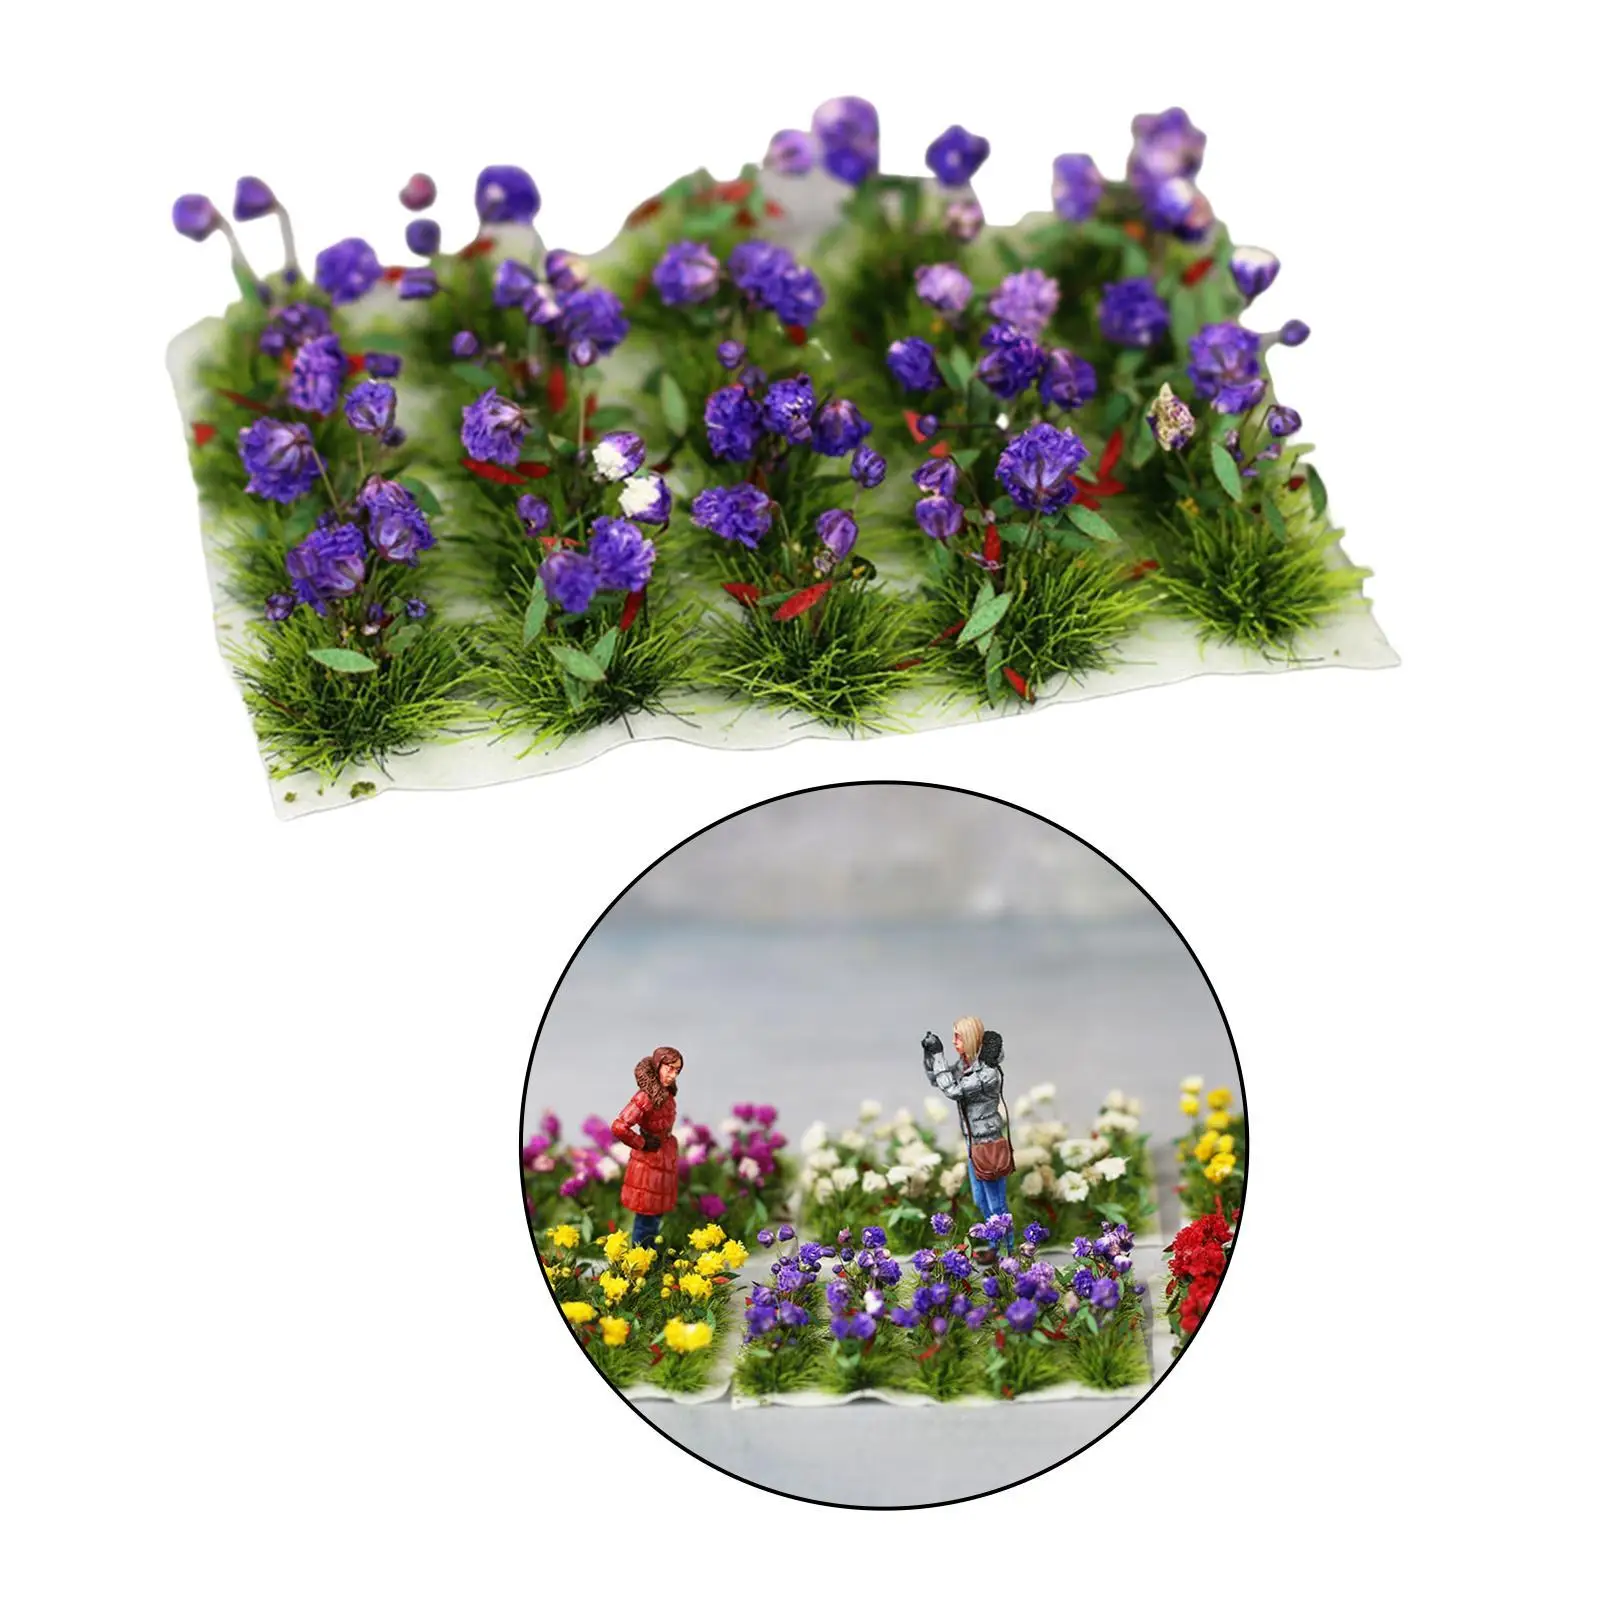 Miniature Simulation Flower Cluster Model Railway Grass Diorama Layout